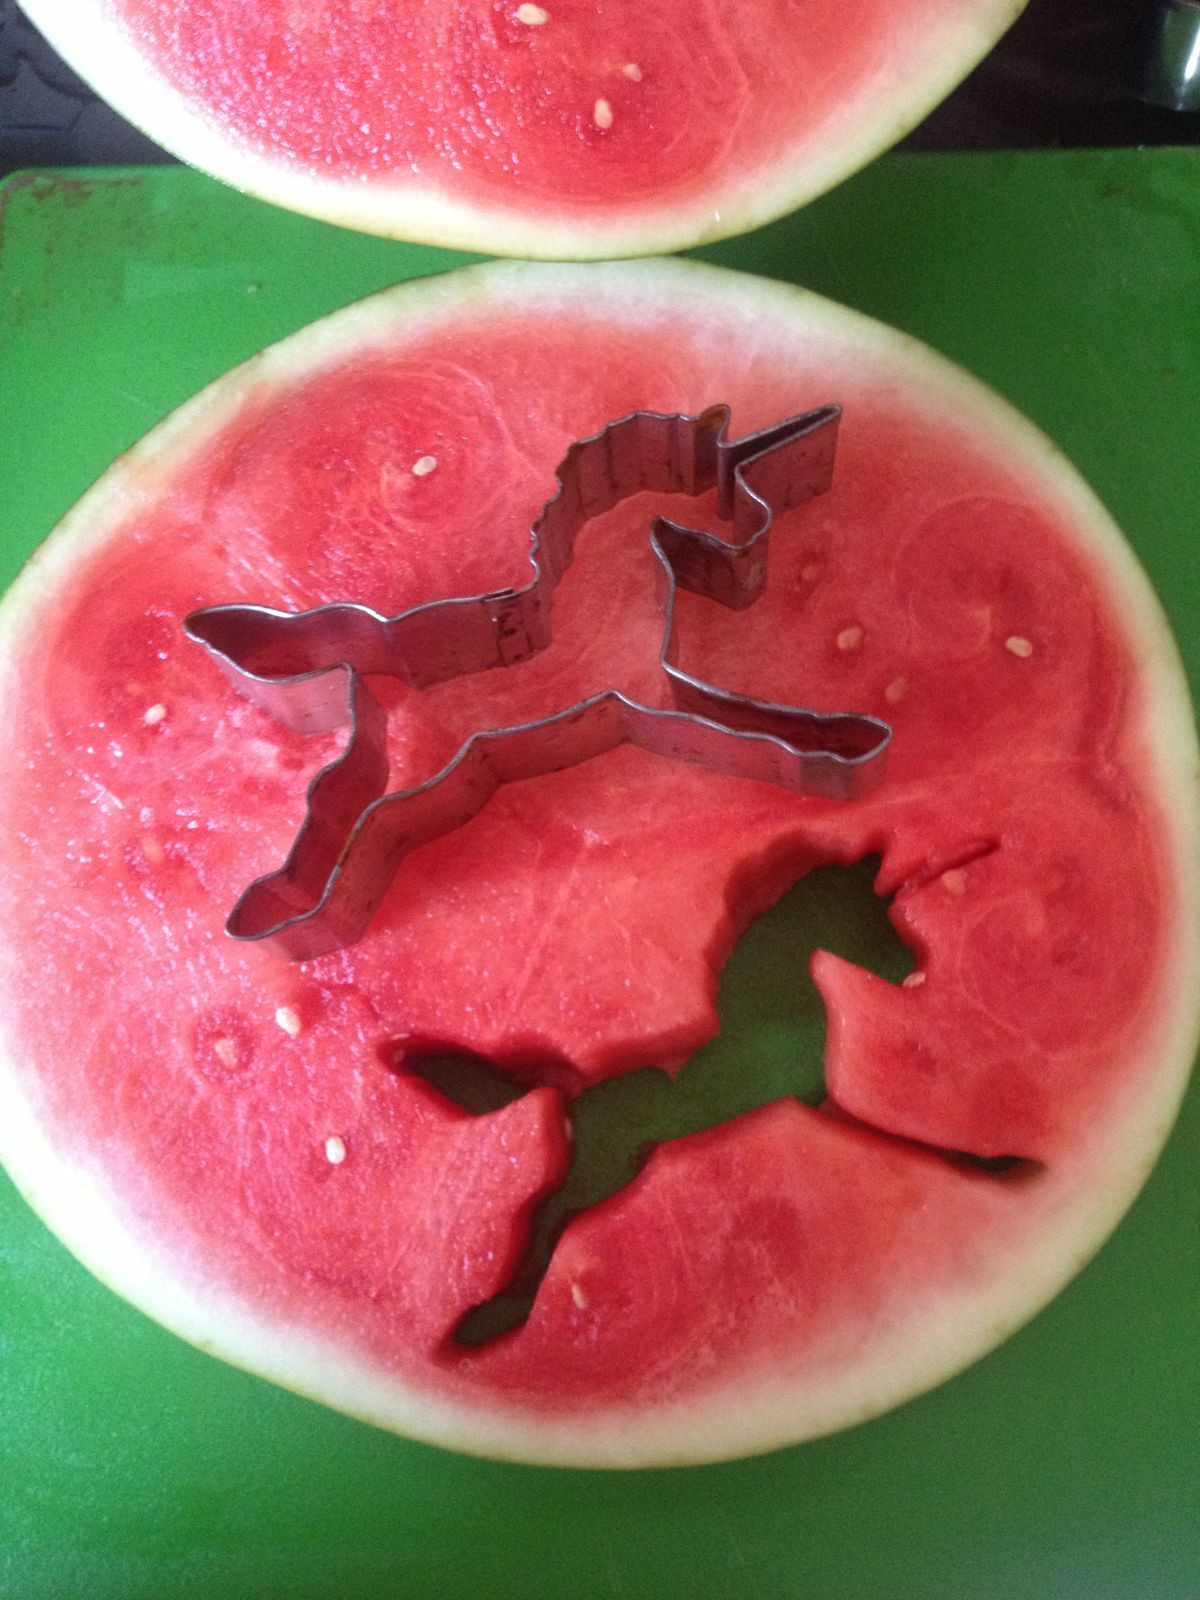 Unicorn Party Food Ideas Ponytails
 Watermelon unicorns Party food has no limits when you